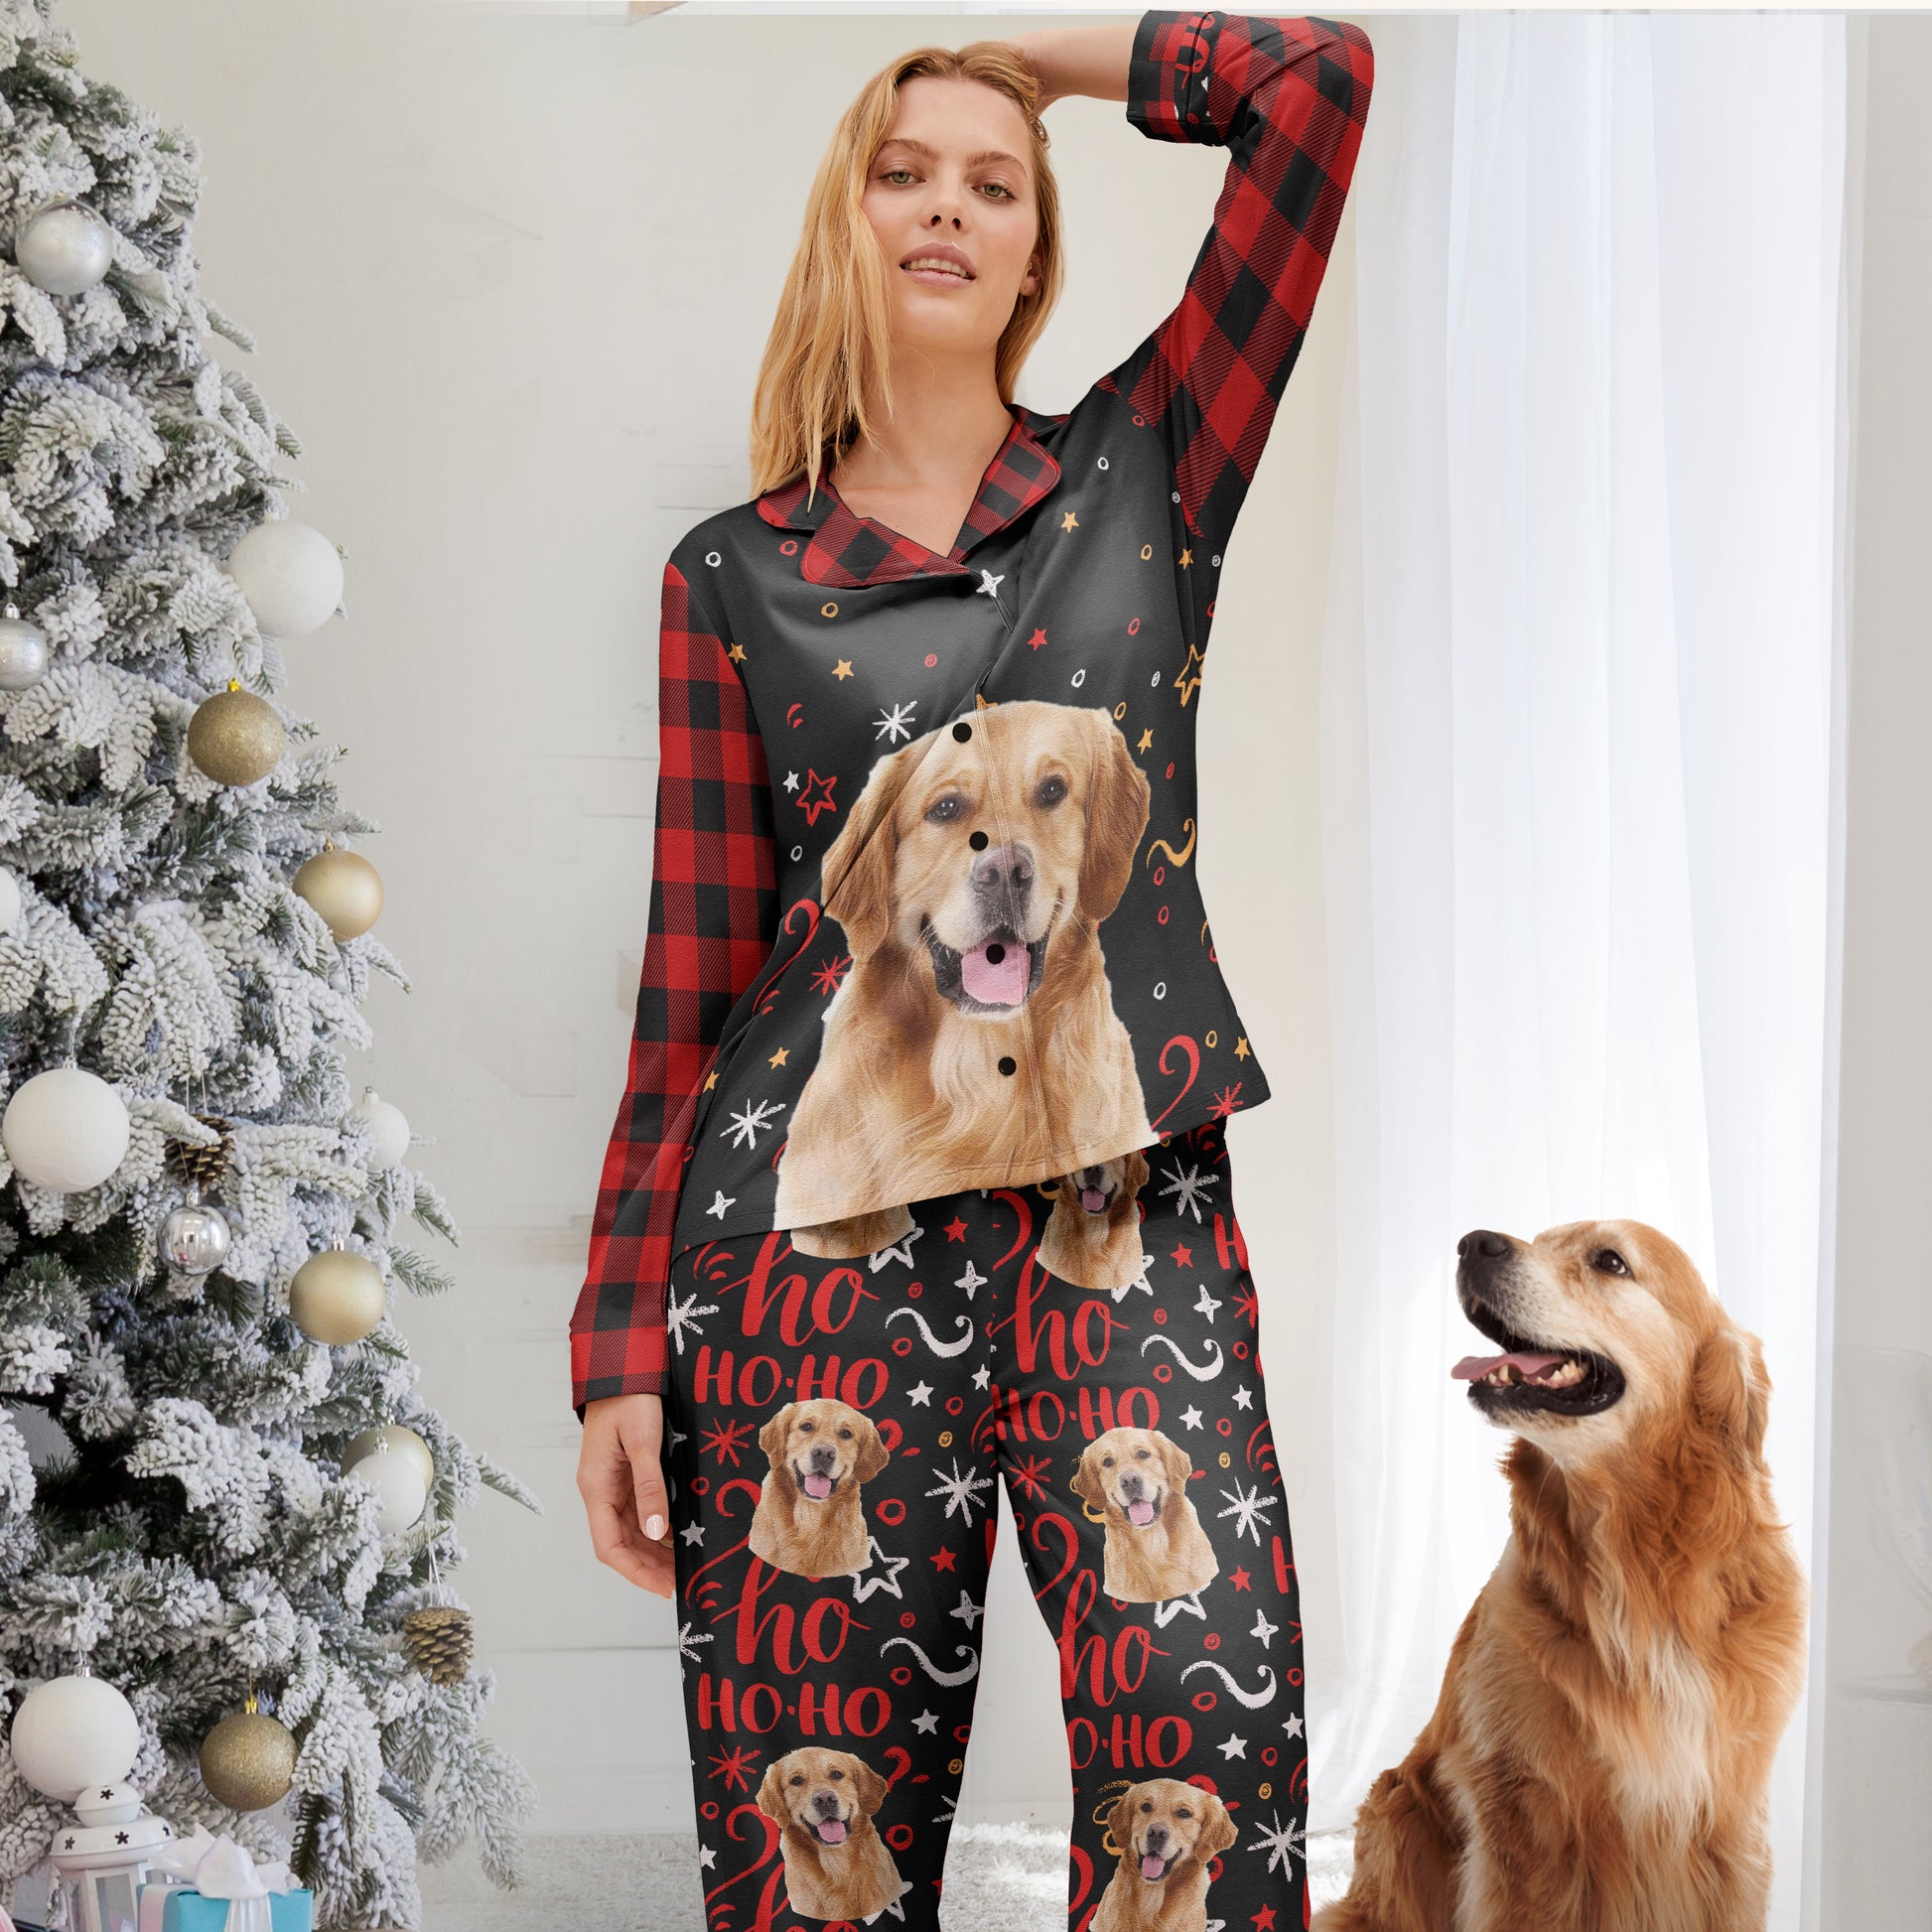 Monogrammed Flannel Matching Family Pajama Set - Christmas Cheer